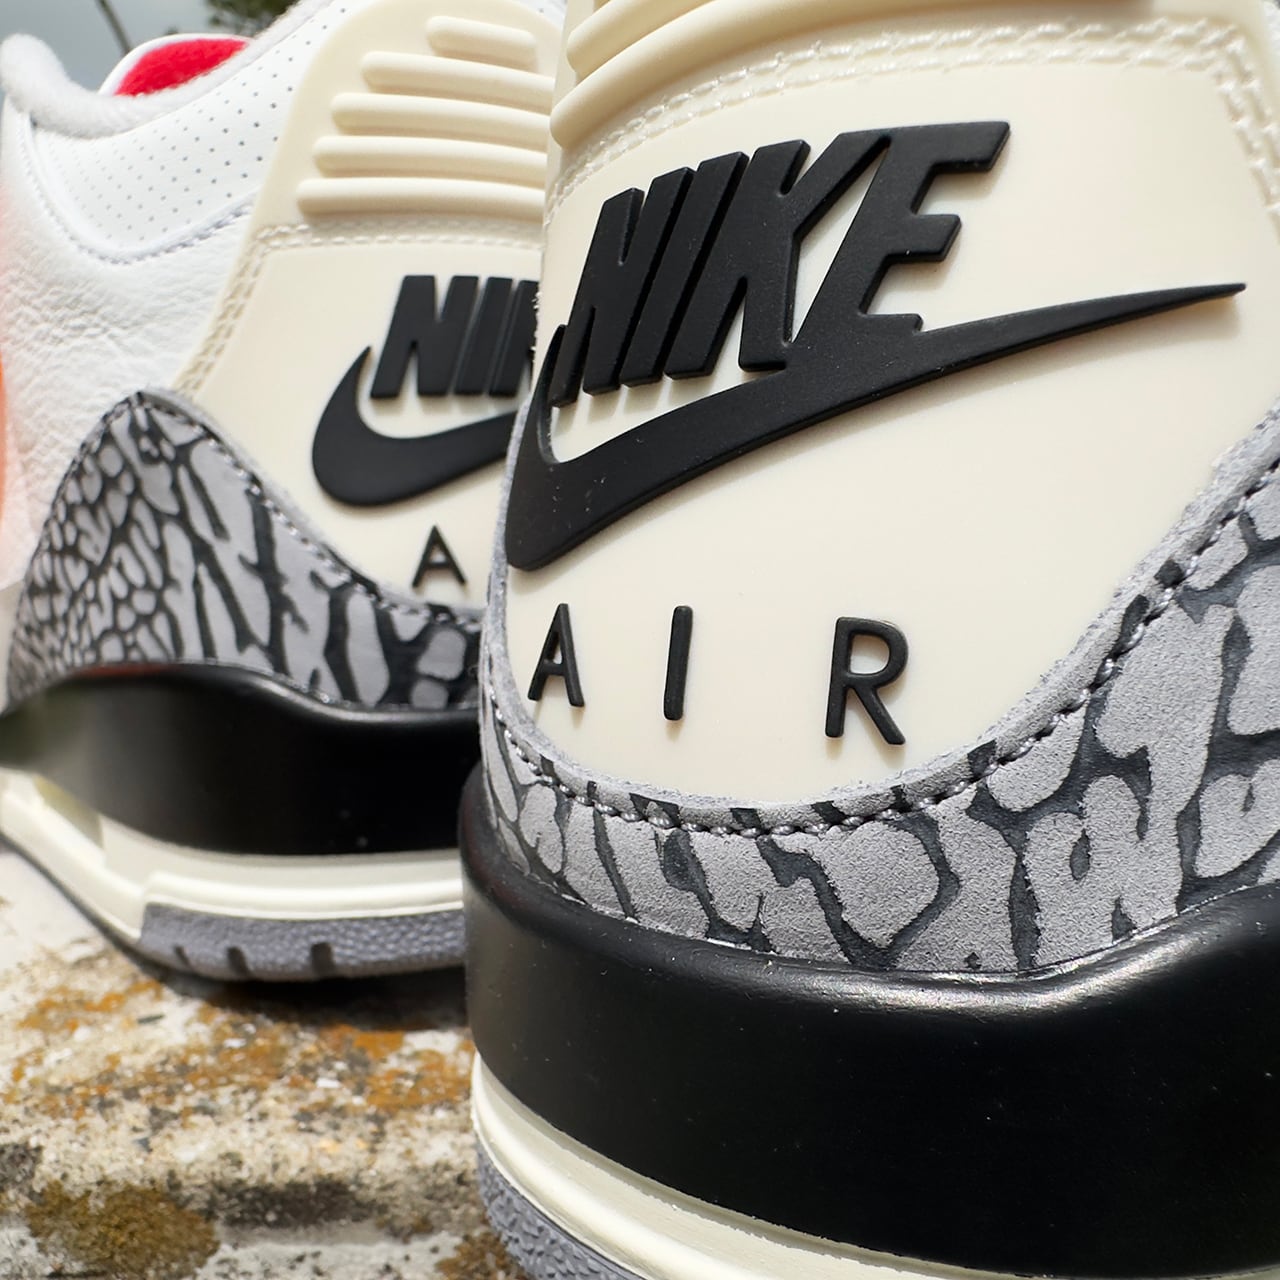 Nike Air Jordan 3 Retro "White Cement Reimagined" ジョーダン3